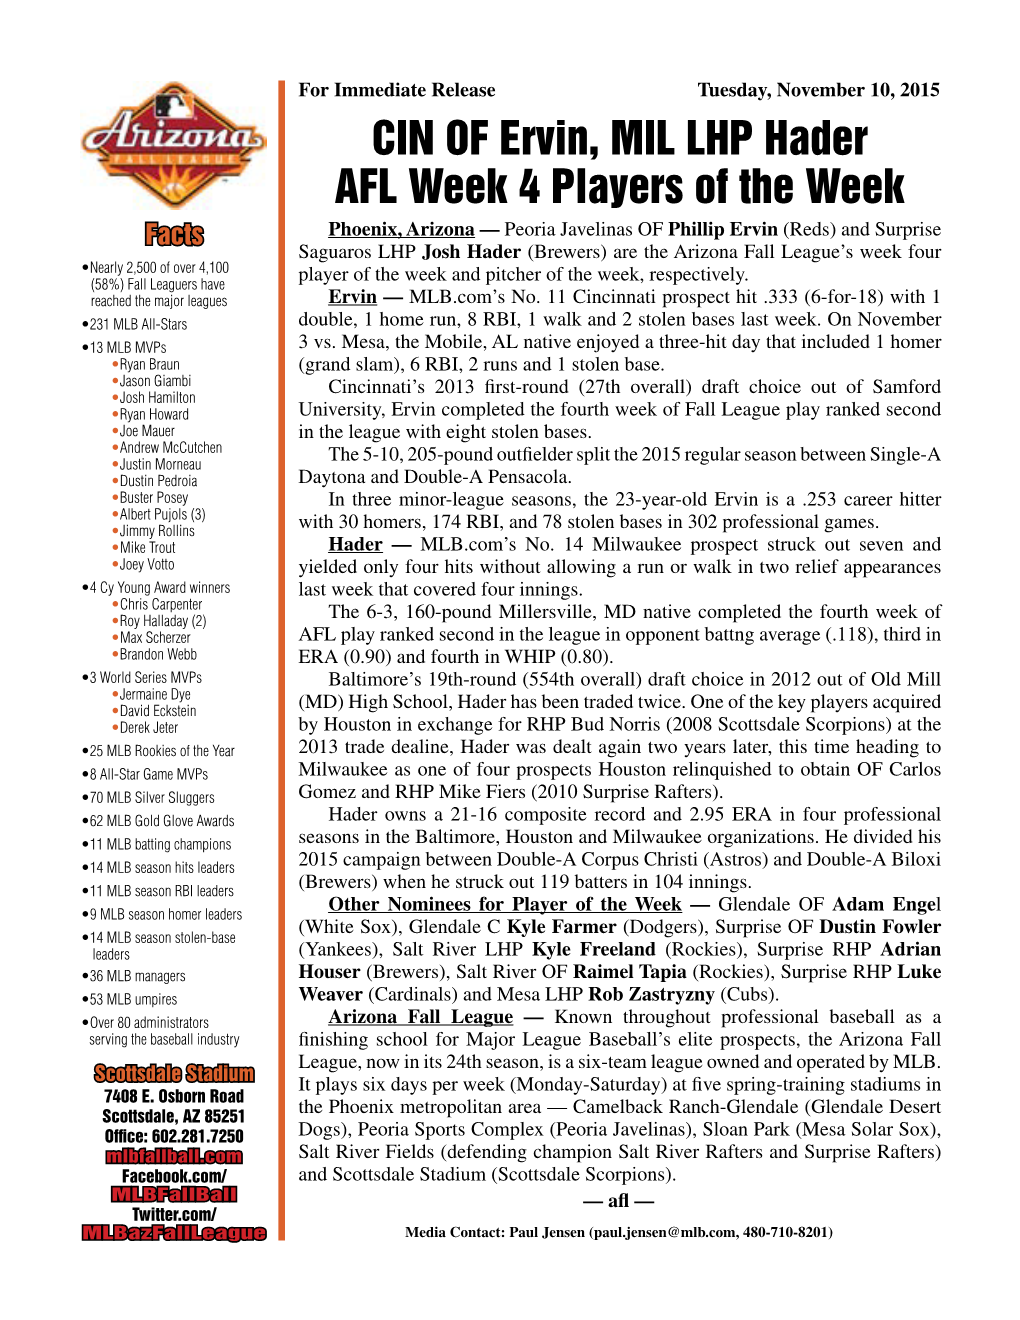 CIN of Ervin, MIL LHP Hader AFL Week 4 Players of The